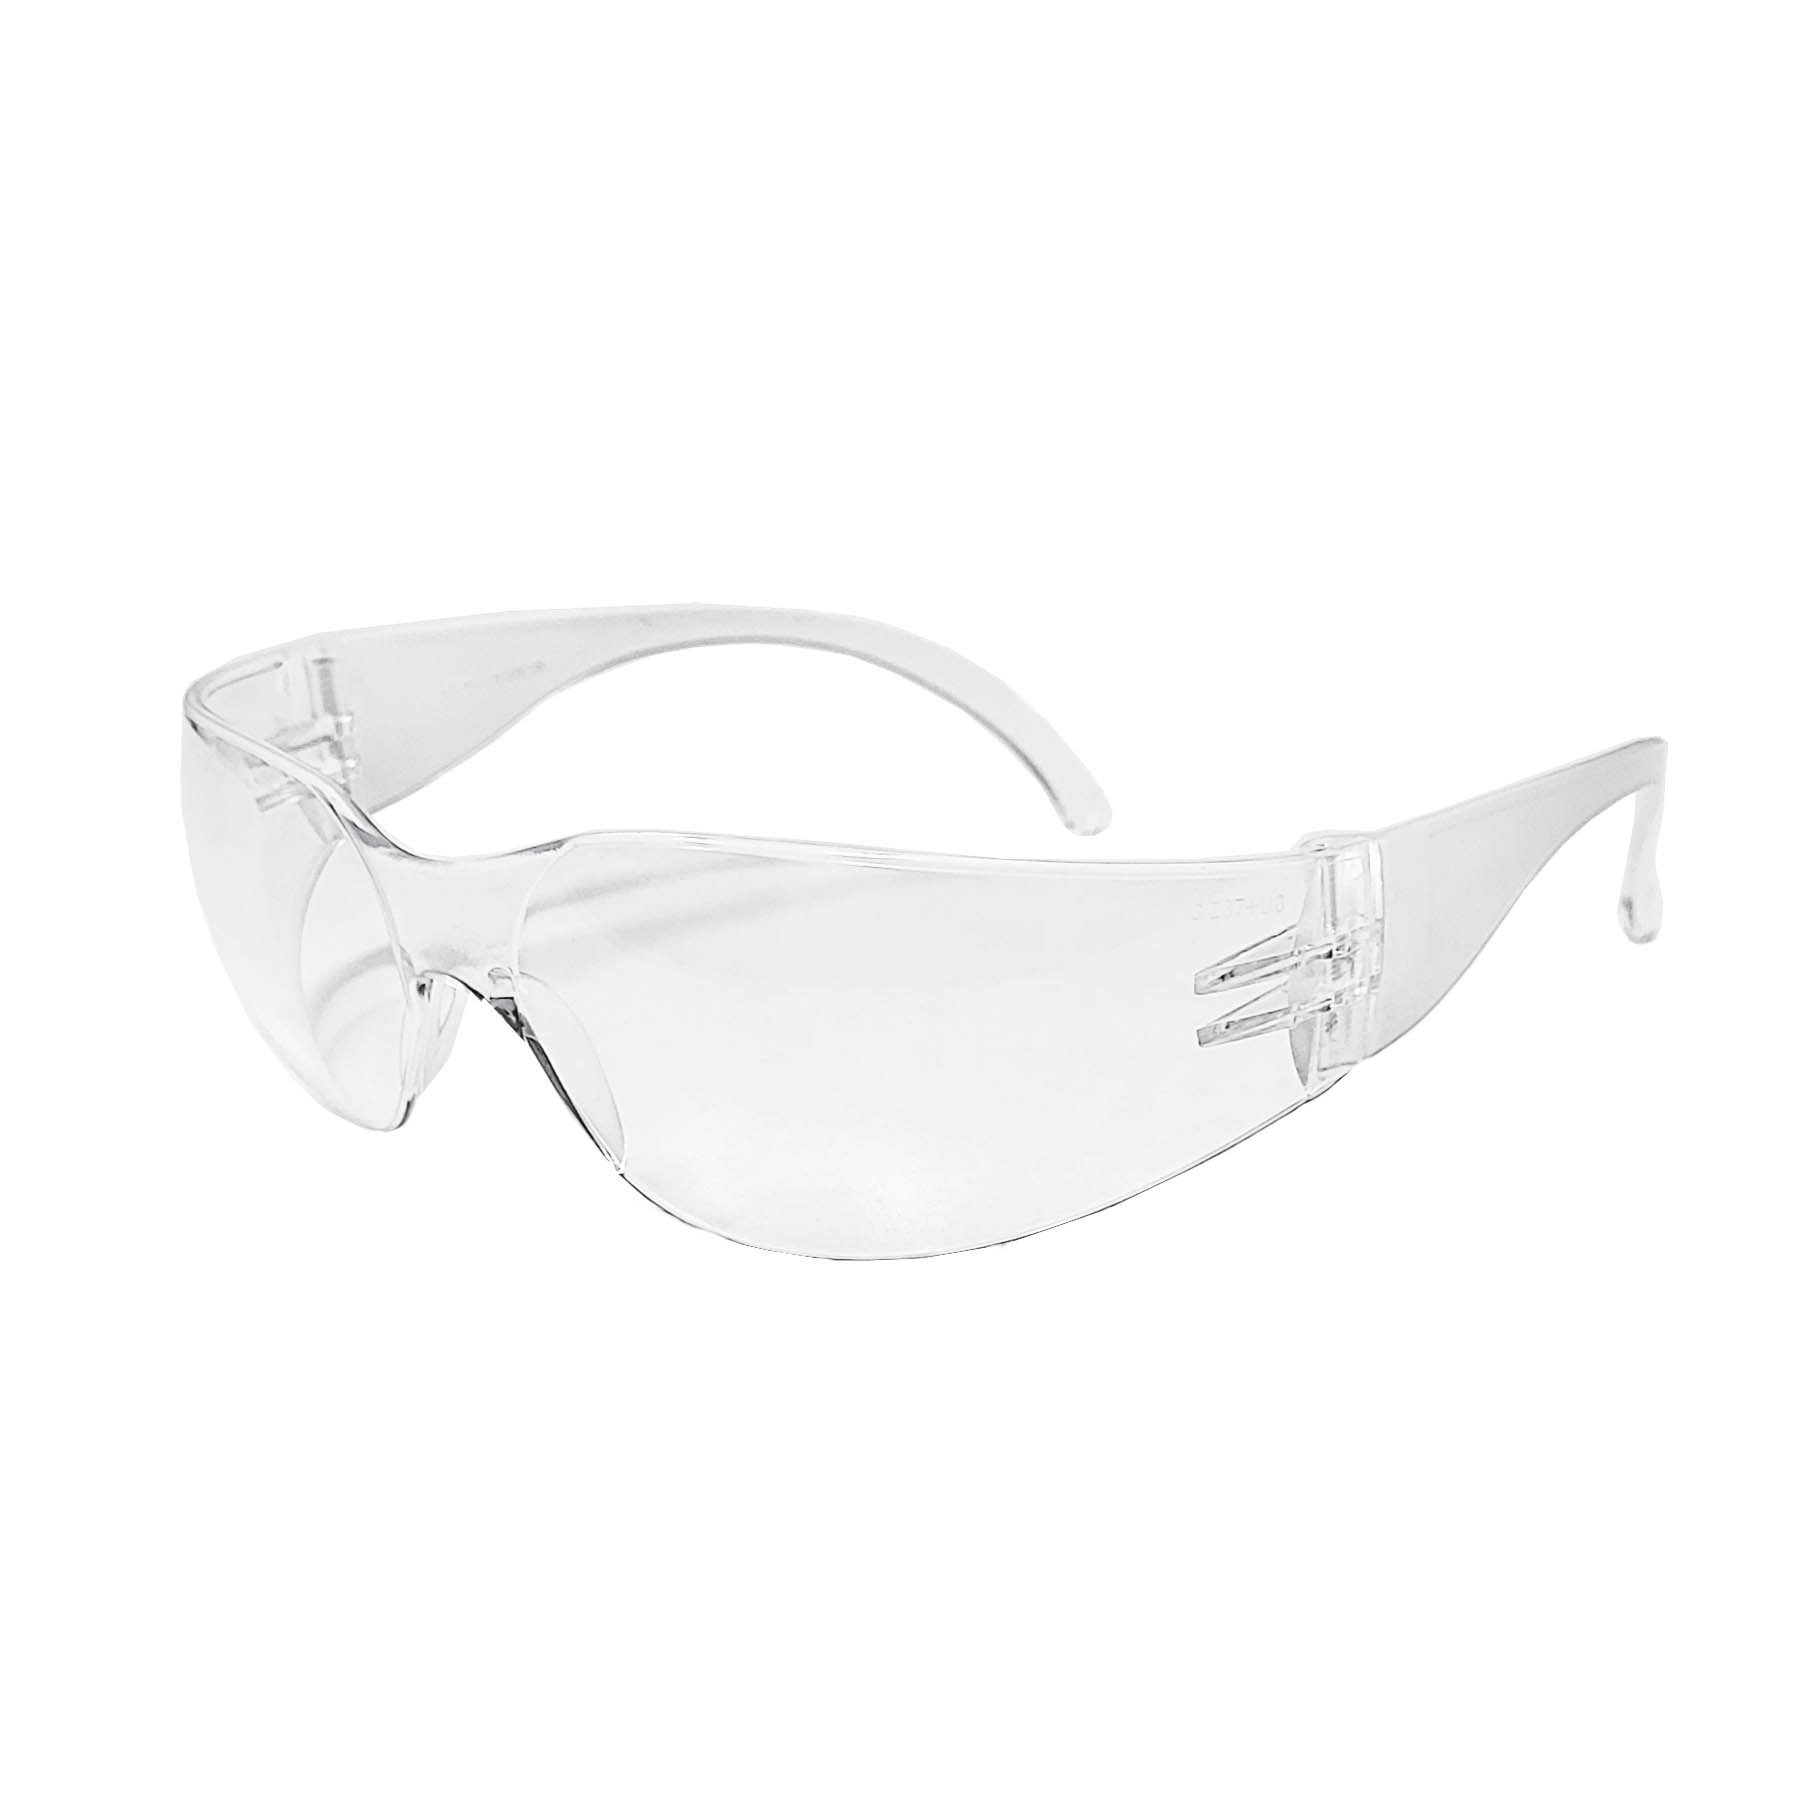 DiVal Safety Glasses